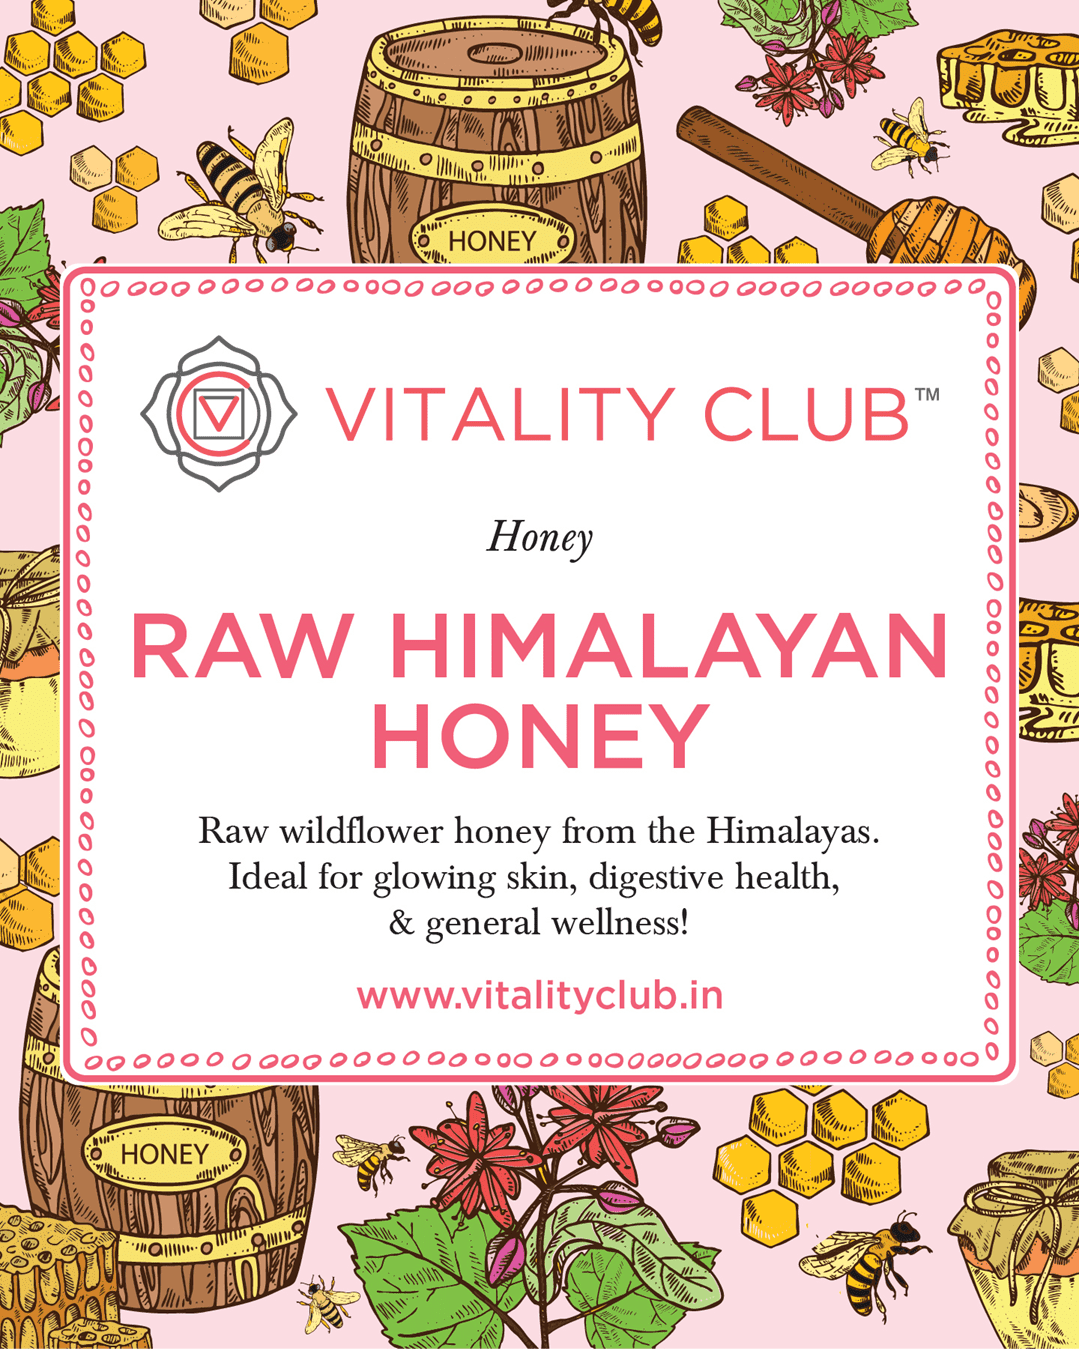 Raw Himalayan Jungle Honey | Vitality Club